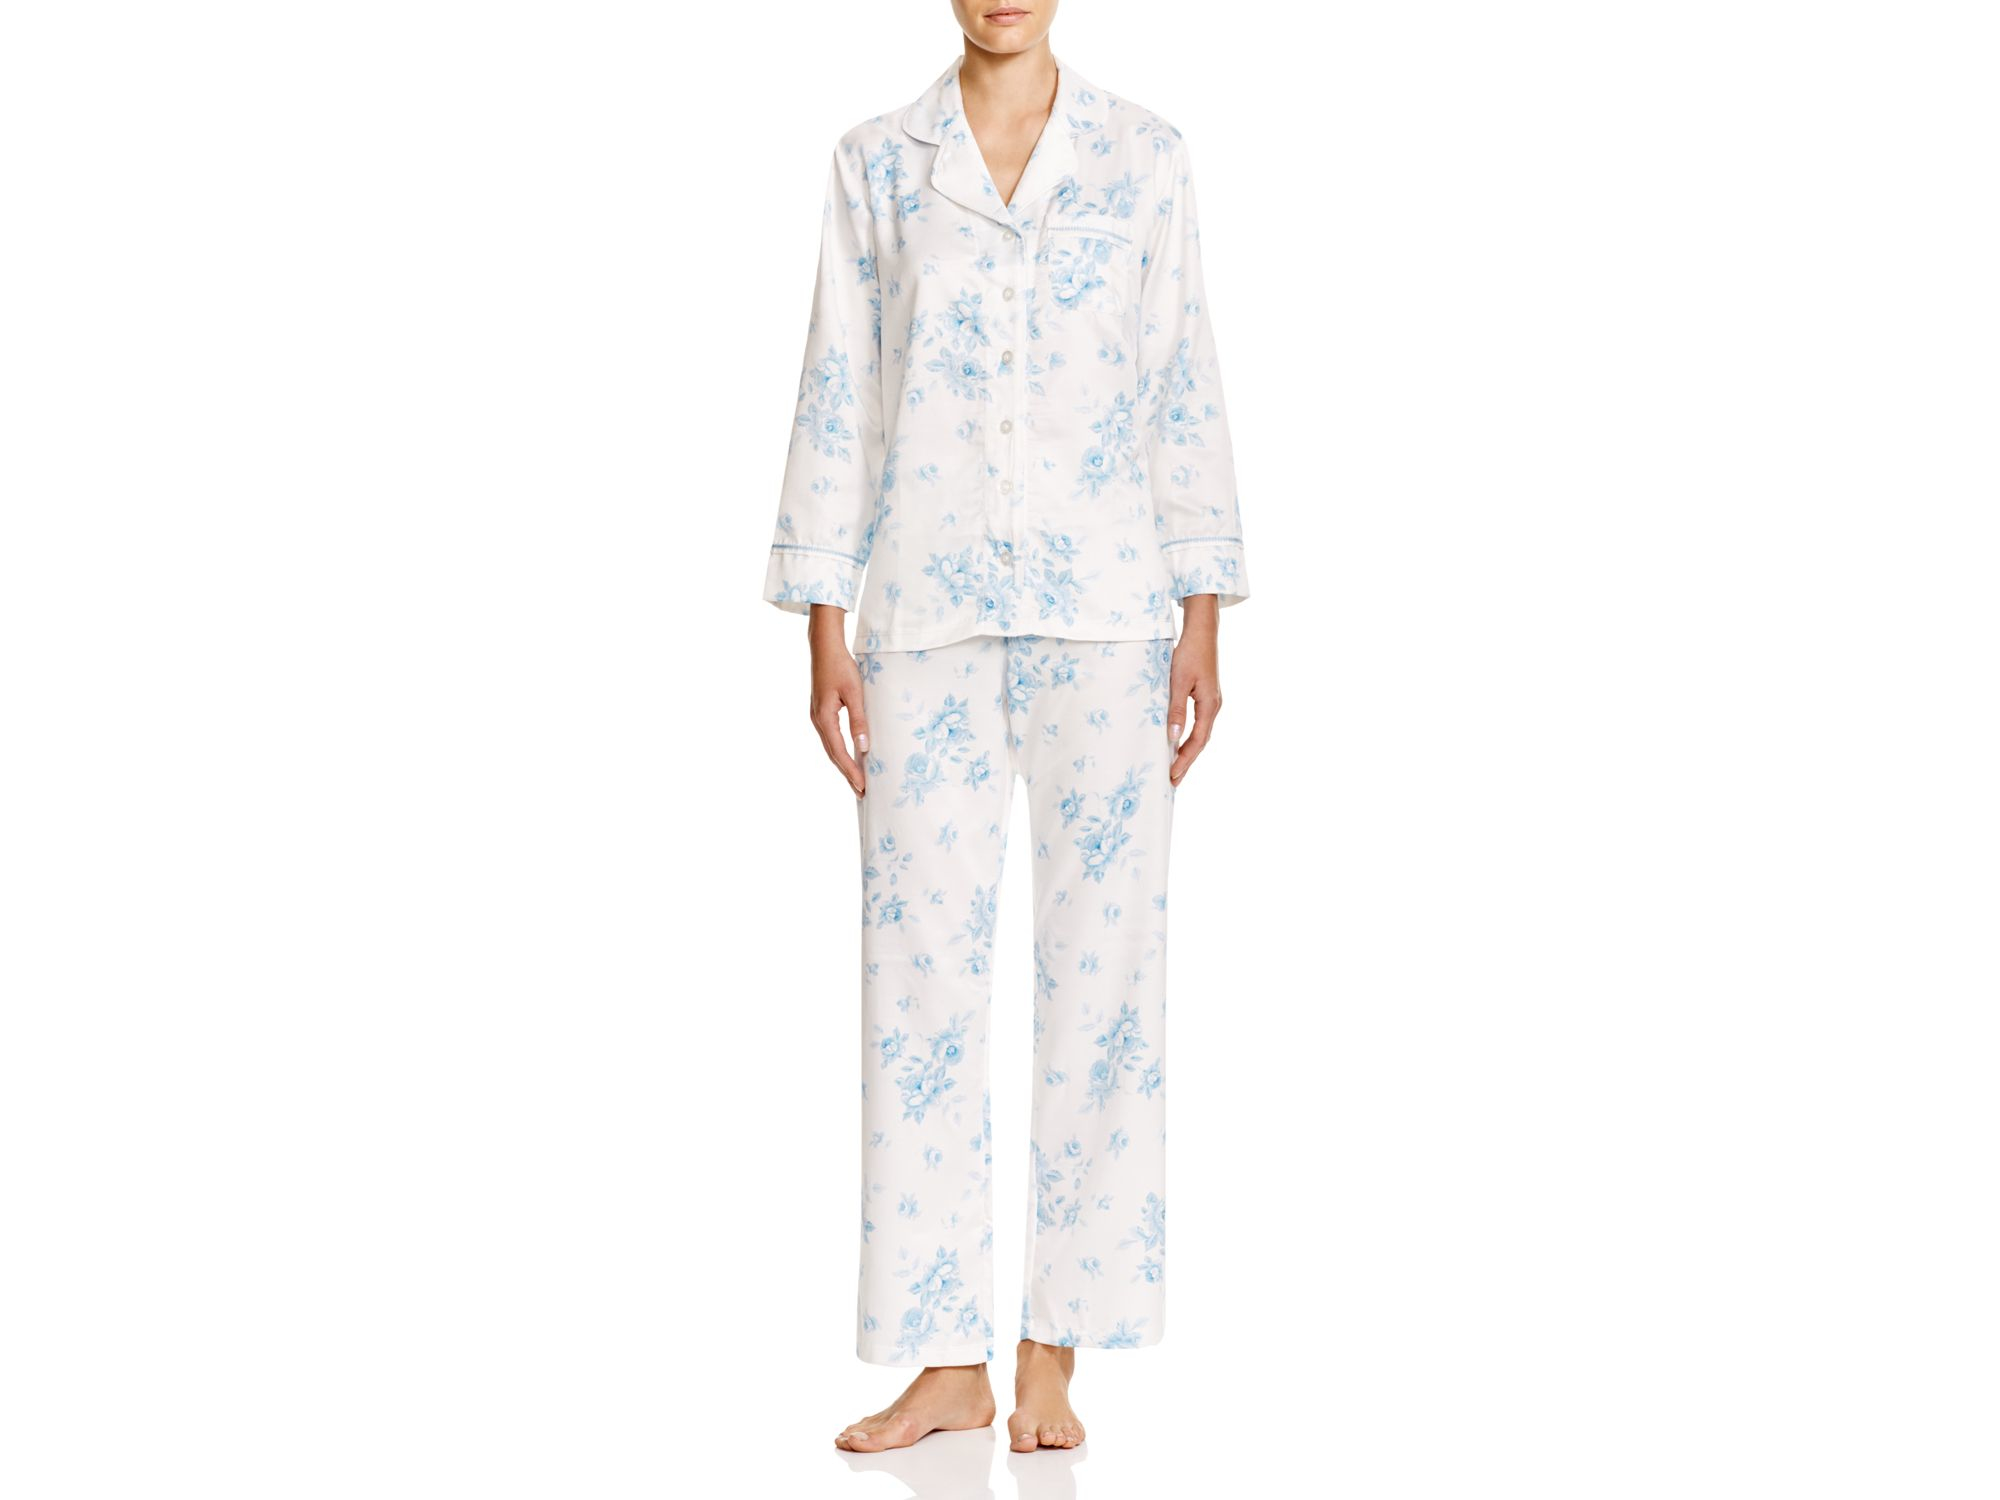 Lyst - Carole Hochman Brushed Back Satin Long Pajama Set in White